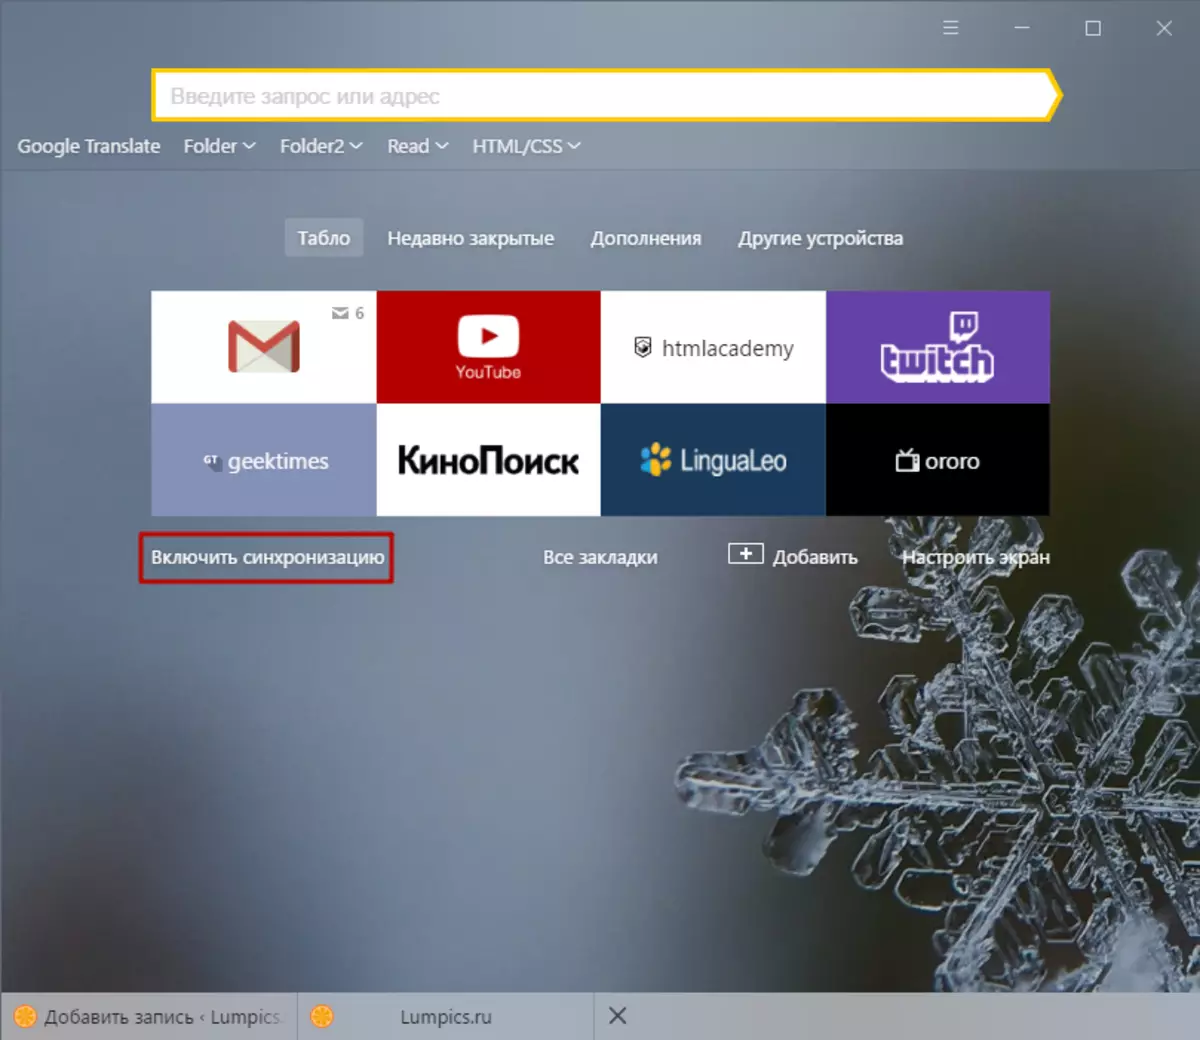 Yandex.browser-2 ರಲ್ಲಿ ಸಿಂಕ್ರೊನೈಸೇಶನ್